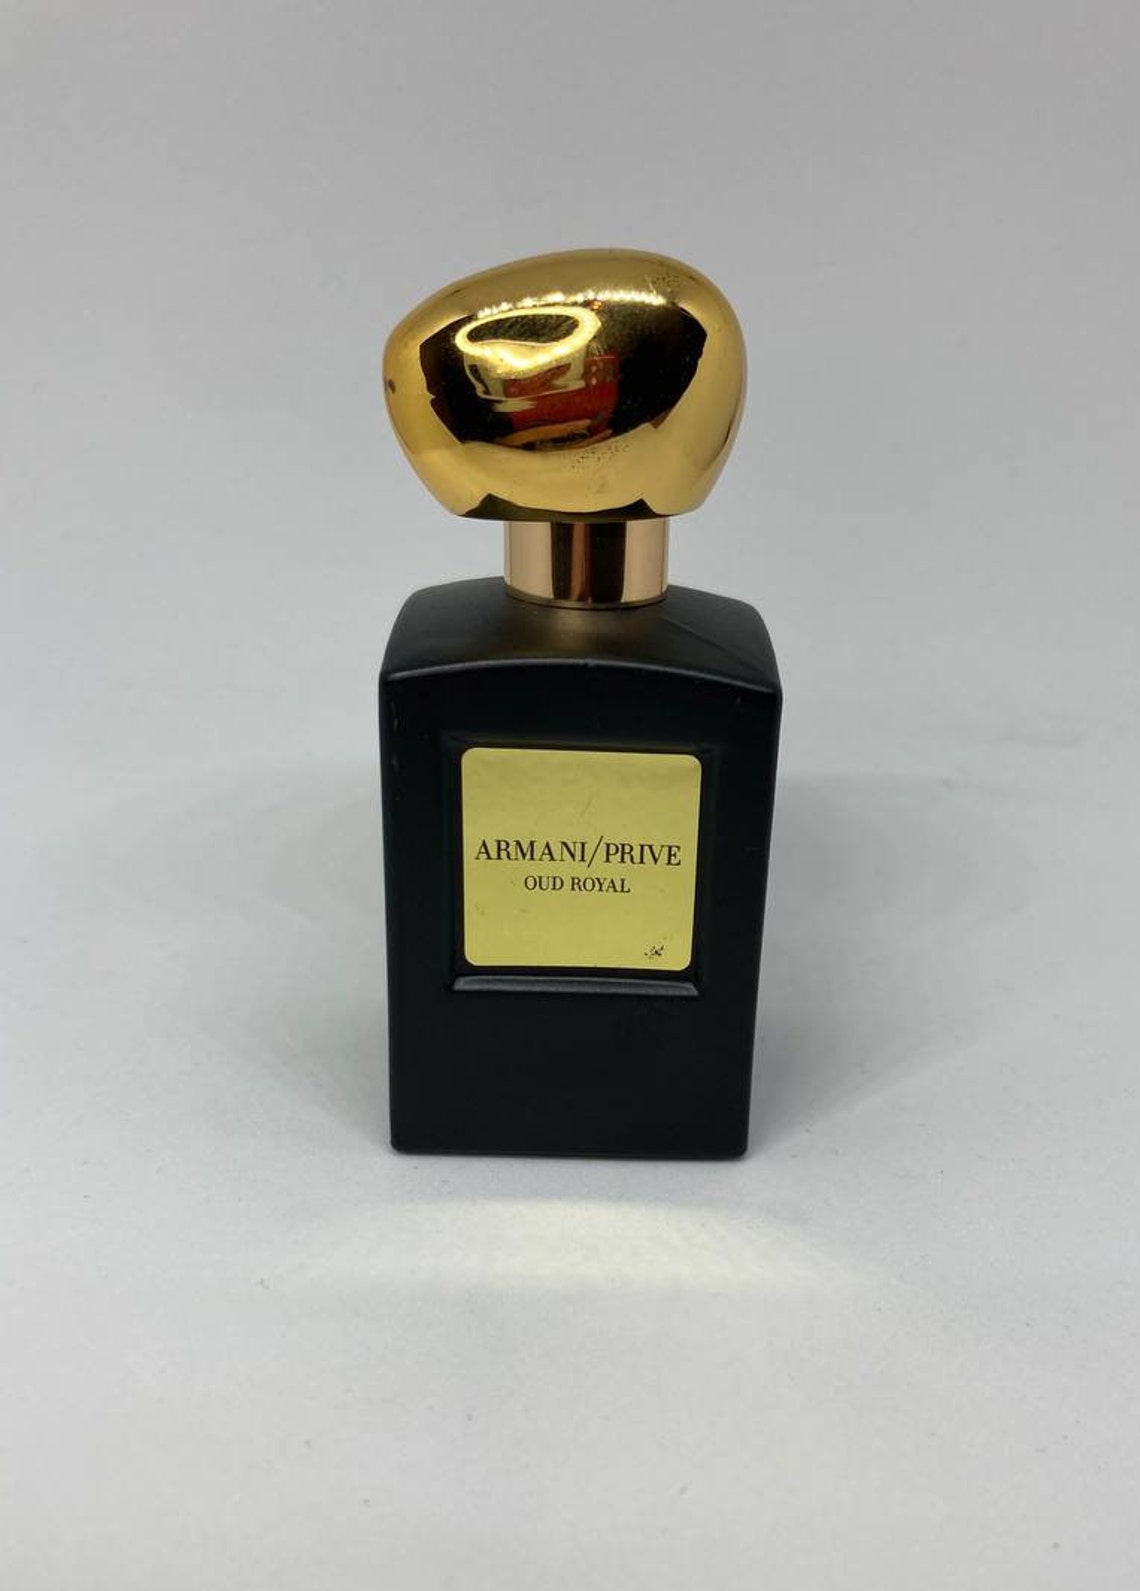 GIORGIO Armani Privé Oud Royal perfume 30ml old stock | Etsy